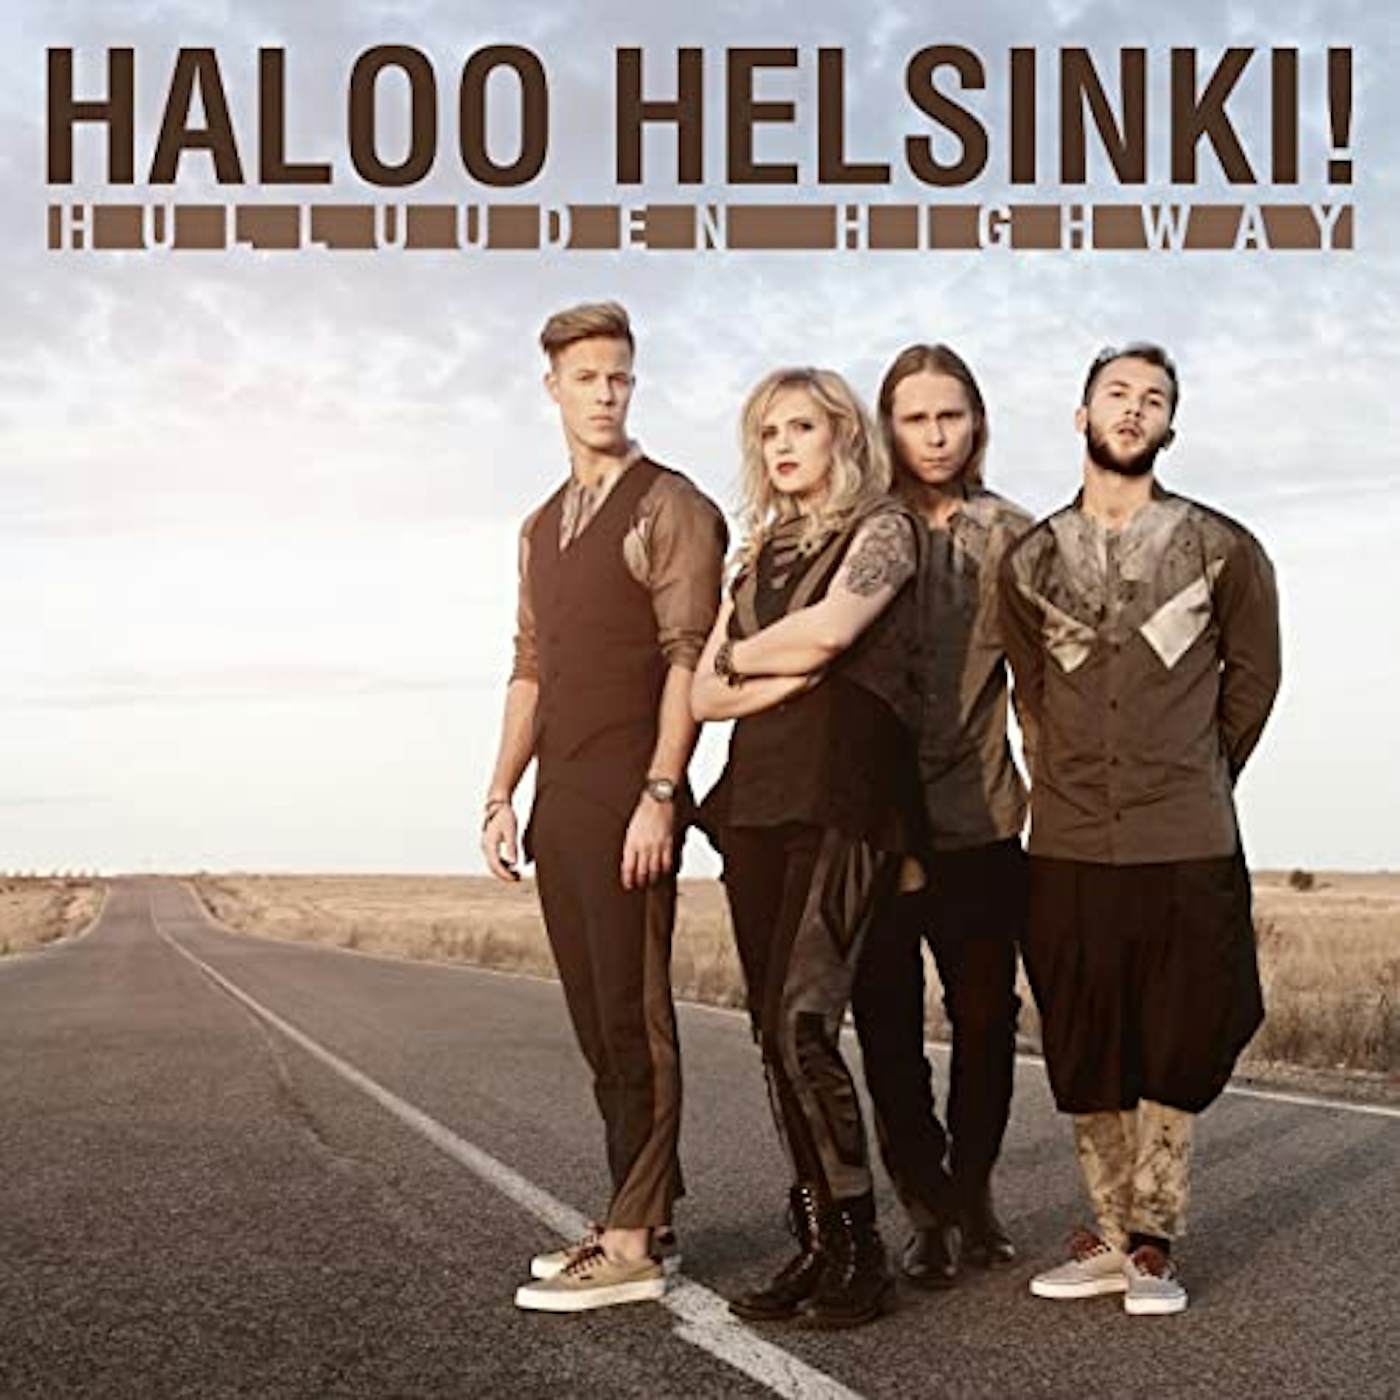 Haloo Helsinki! Hulluuden Highway Vinyl Record